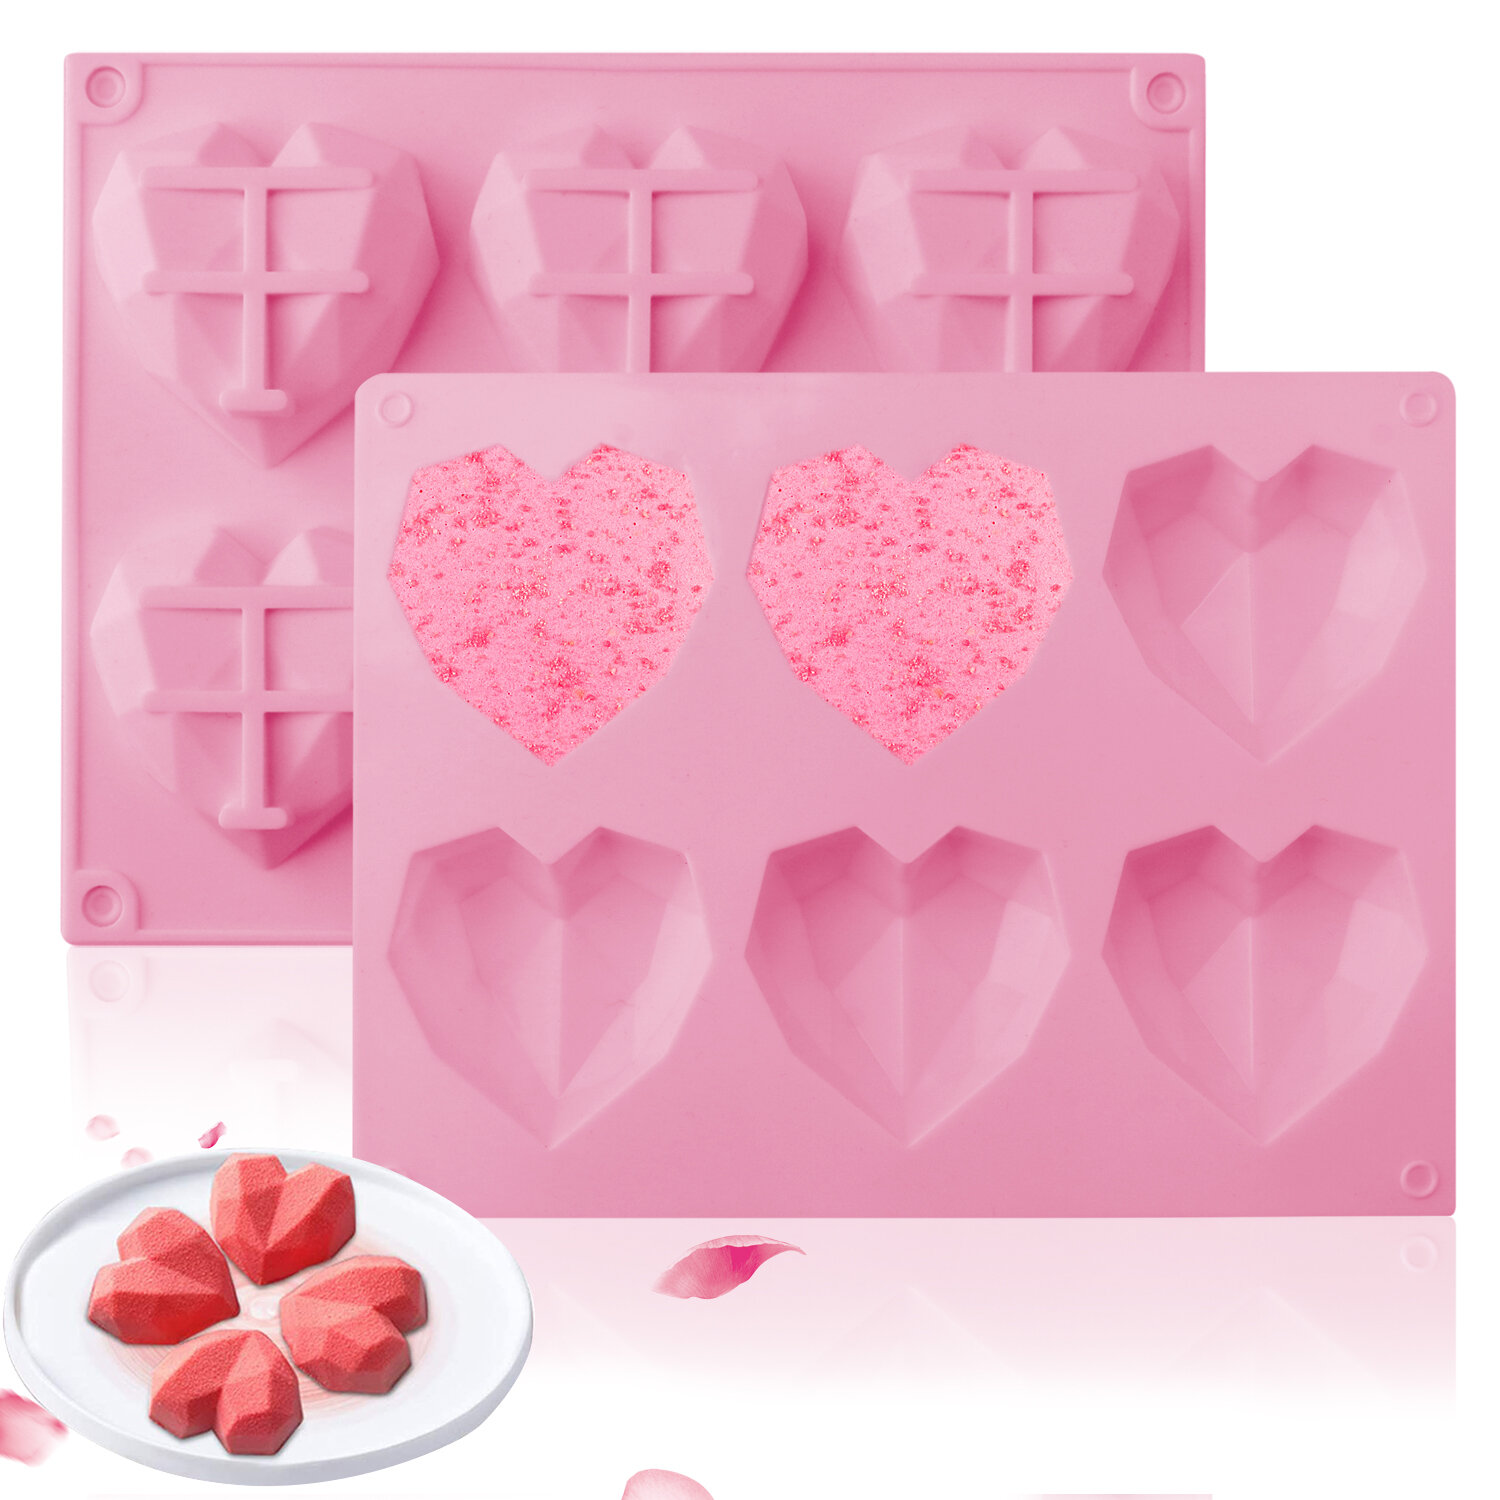 3D Heart Fondant Mold Silicone Cake Decoration Craft Sugar Chocolate Mould DIY N 